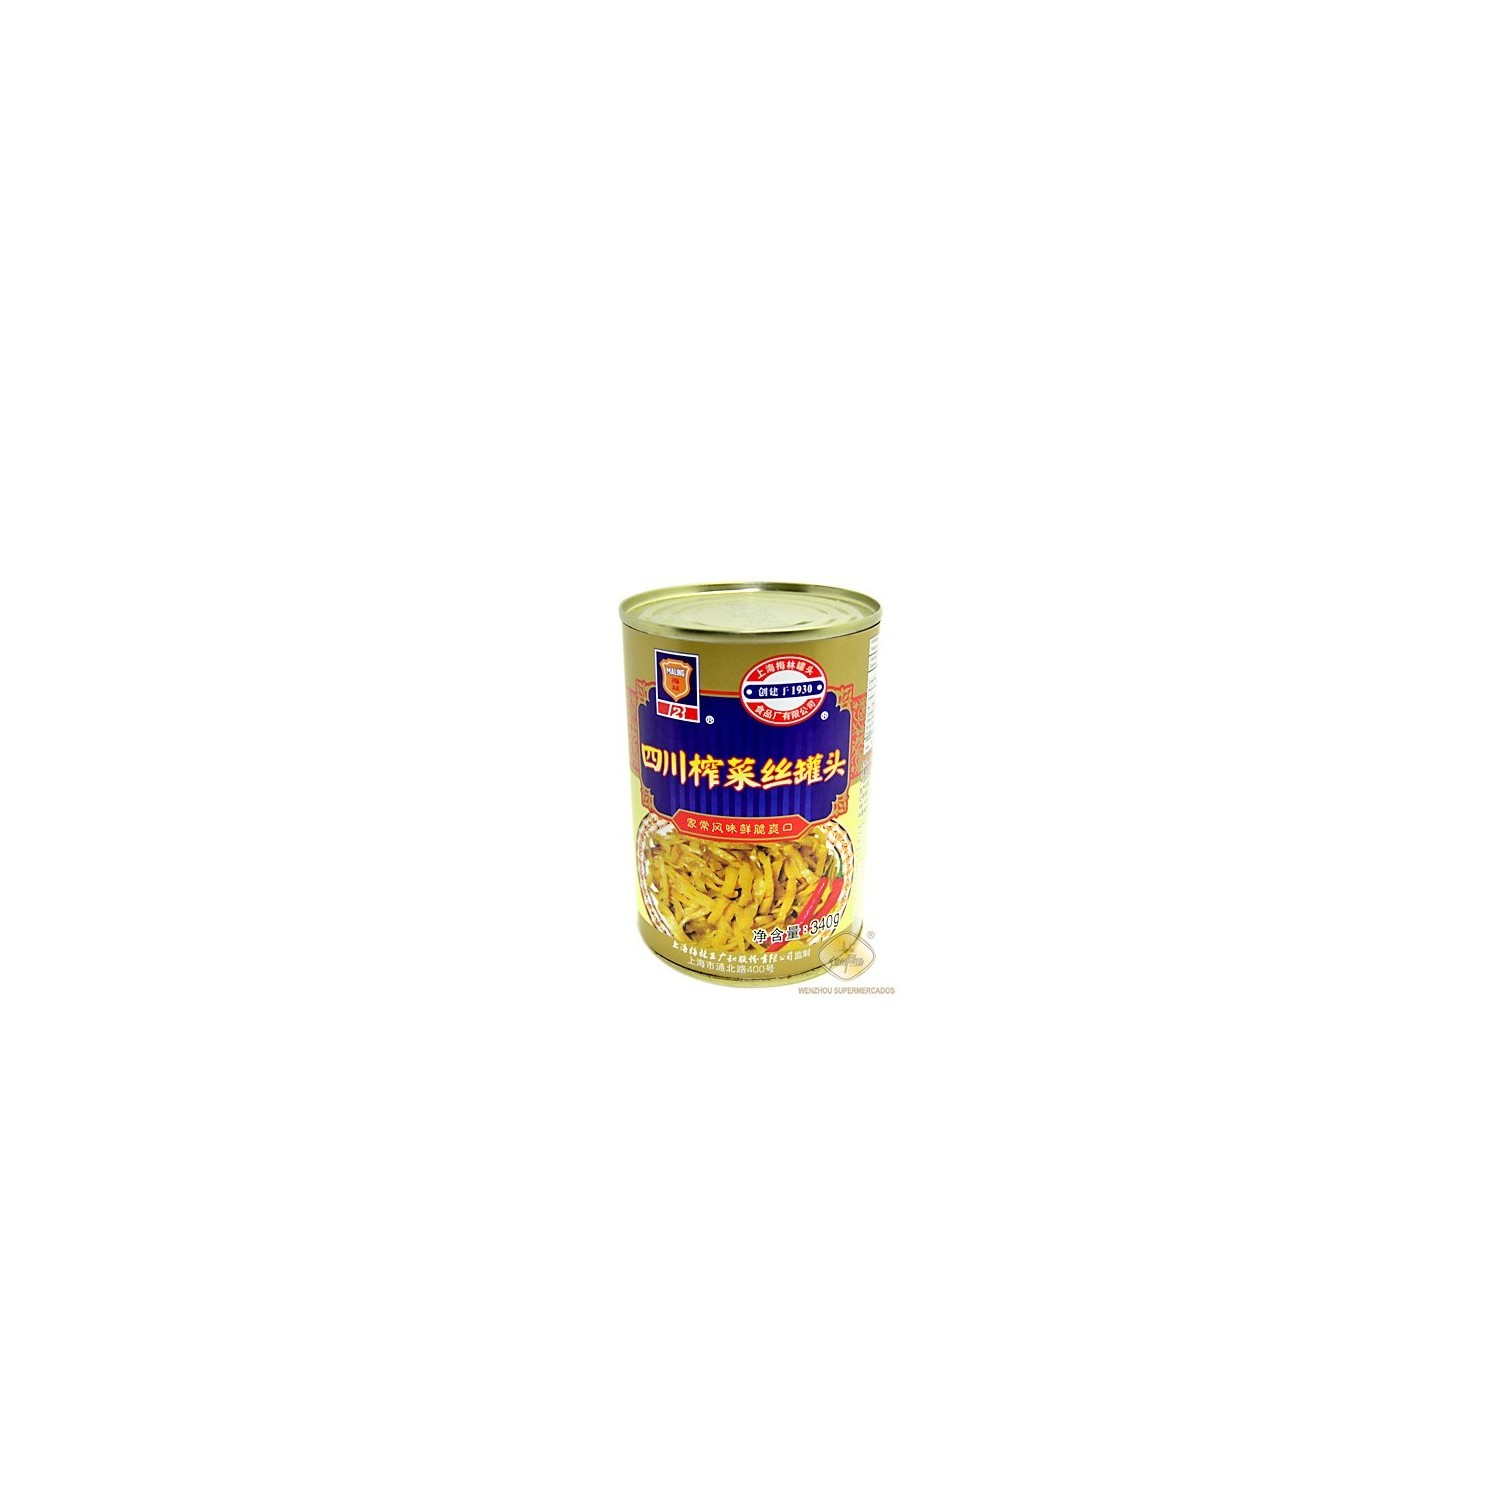 Maling 340g Canned Preserved Chinese Radish (Shredded)